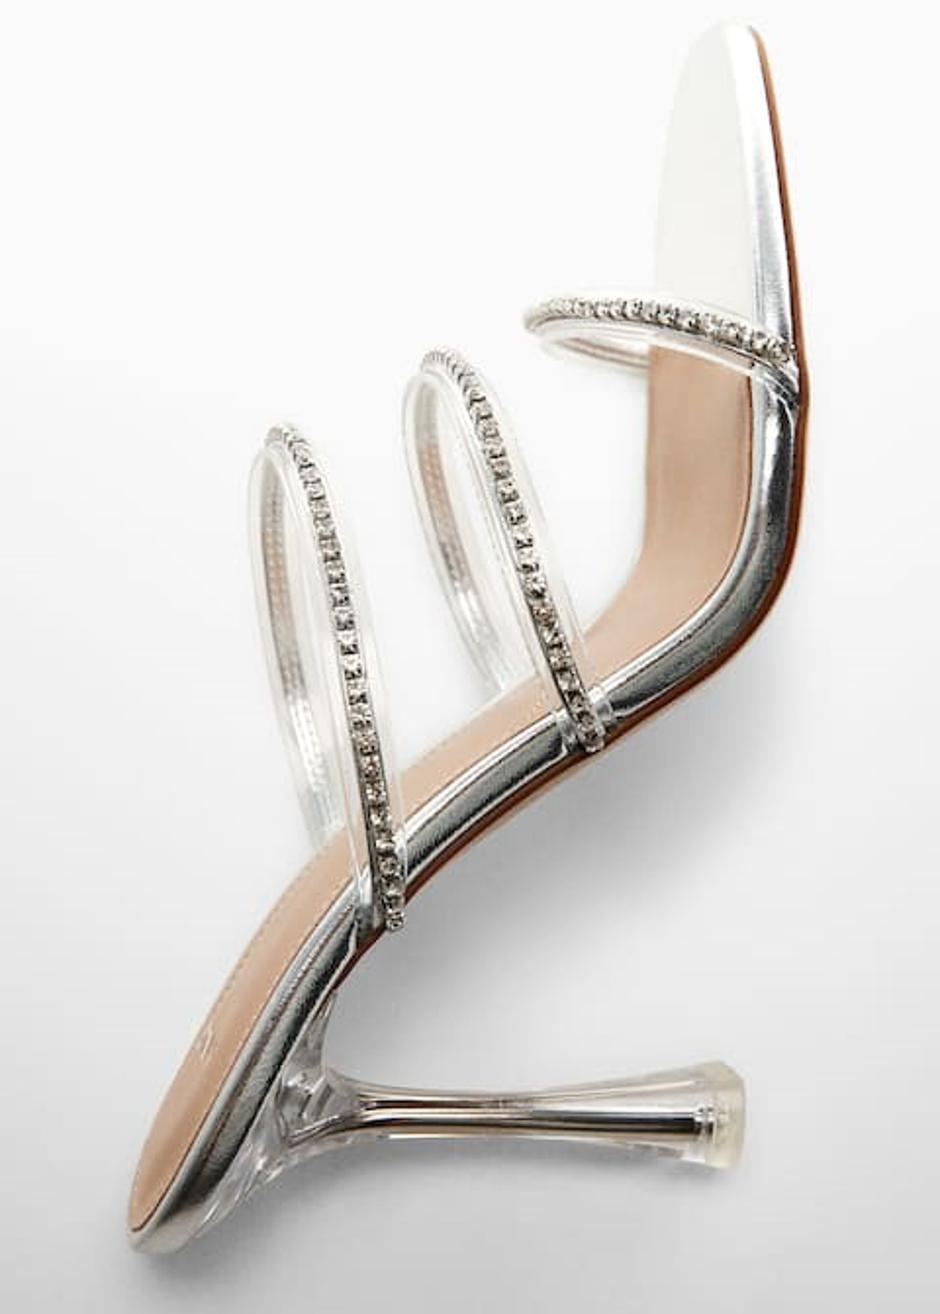 Foto: Mango, srebrne sandale u Amina Muaddi stilu | Autor: Mango